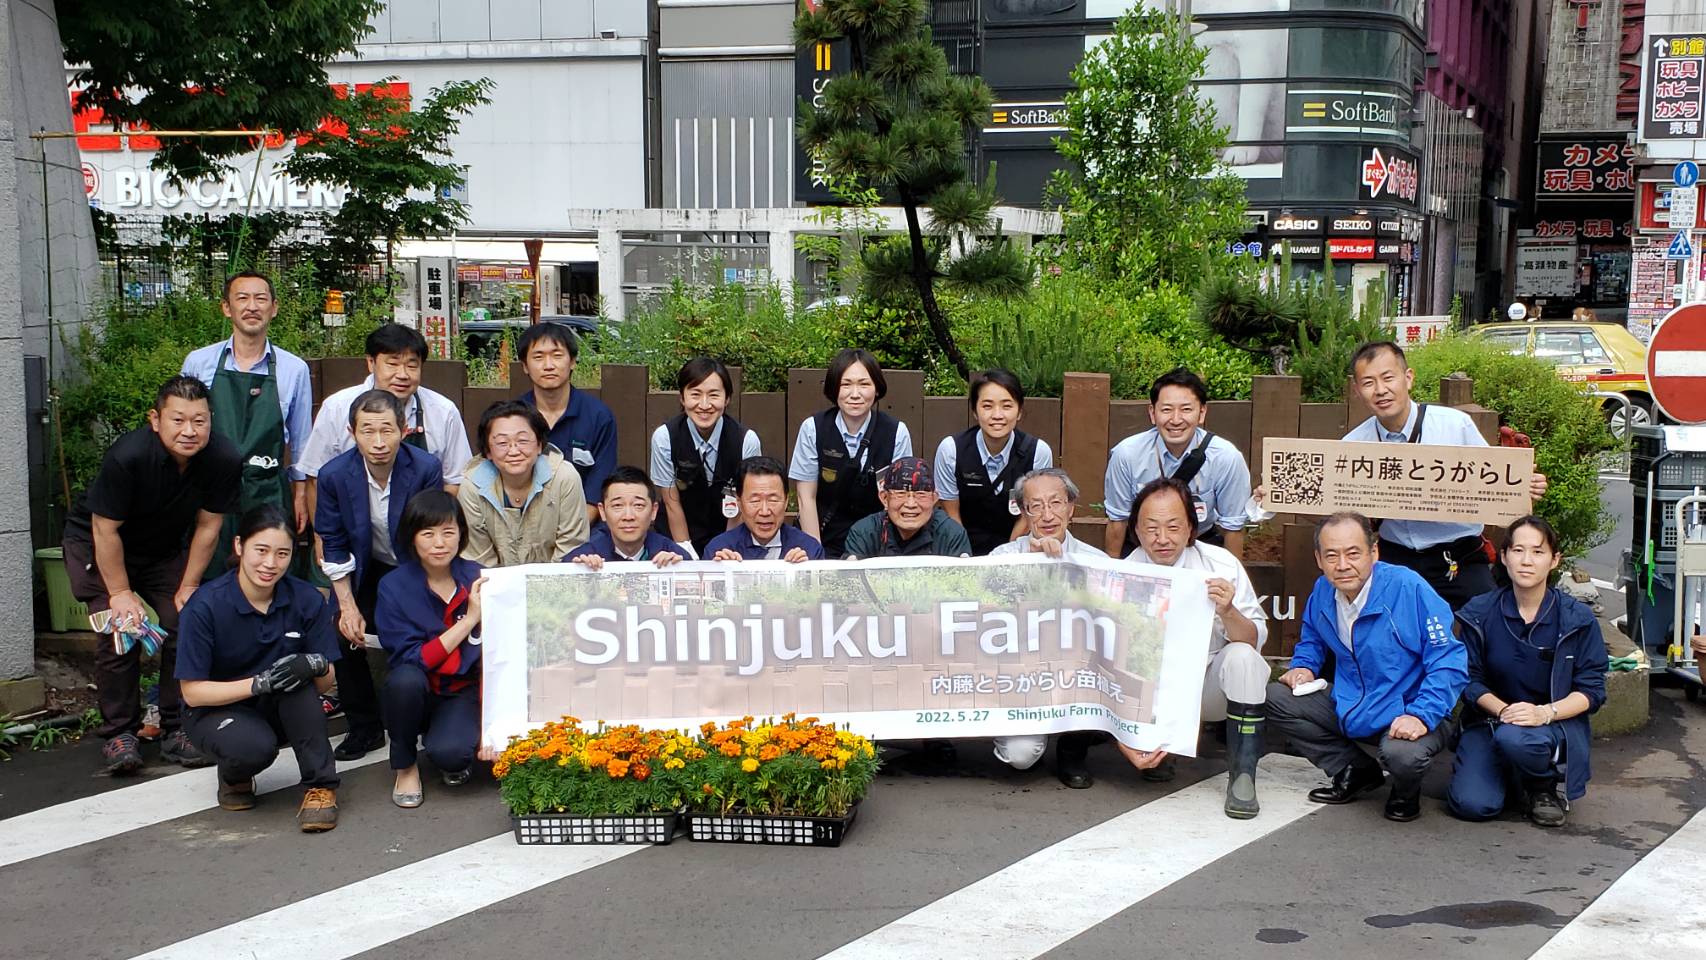 ■JR新宿駅東口広場にて「Shinjuku Farm Project」で造成した花壇に「内藤とうがらし」の苗植えが行われました。